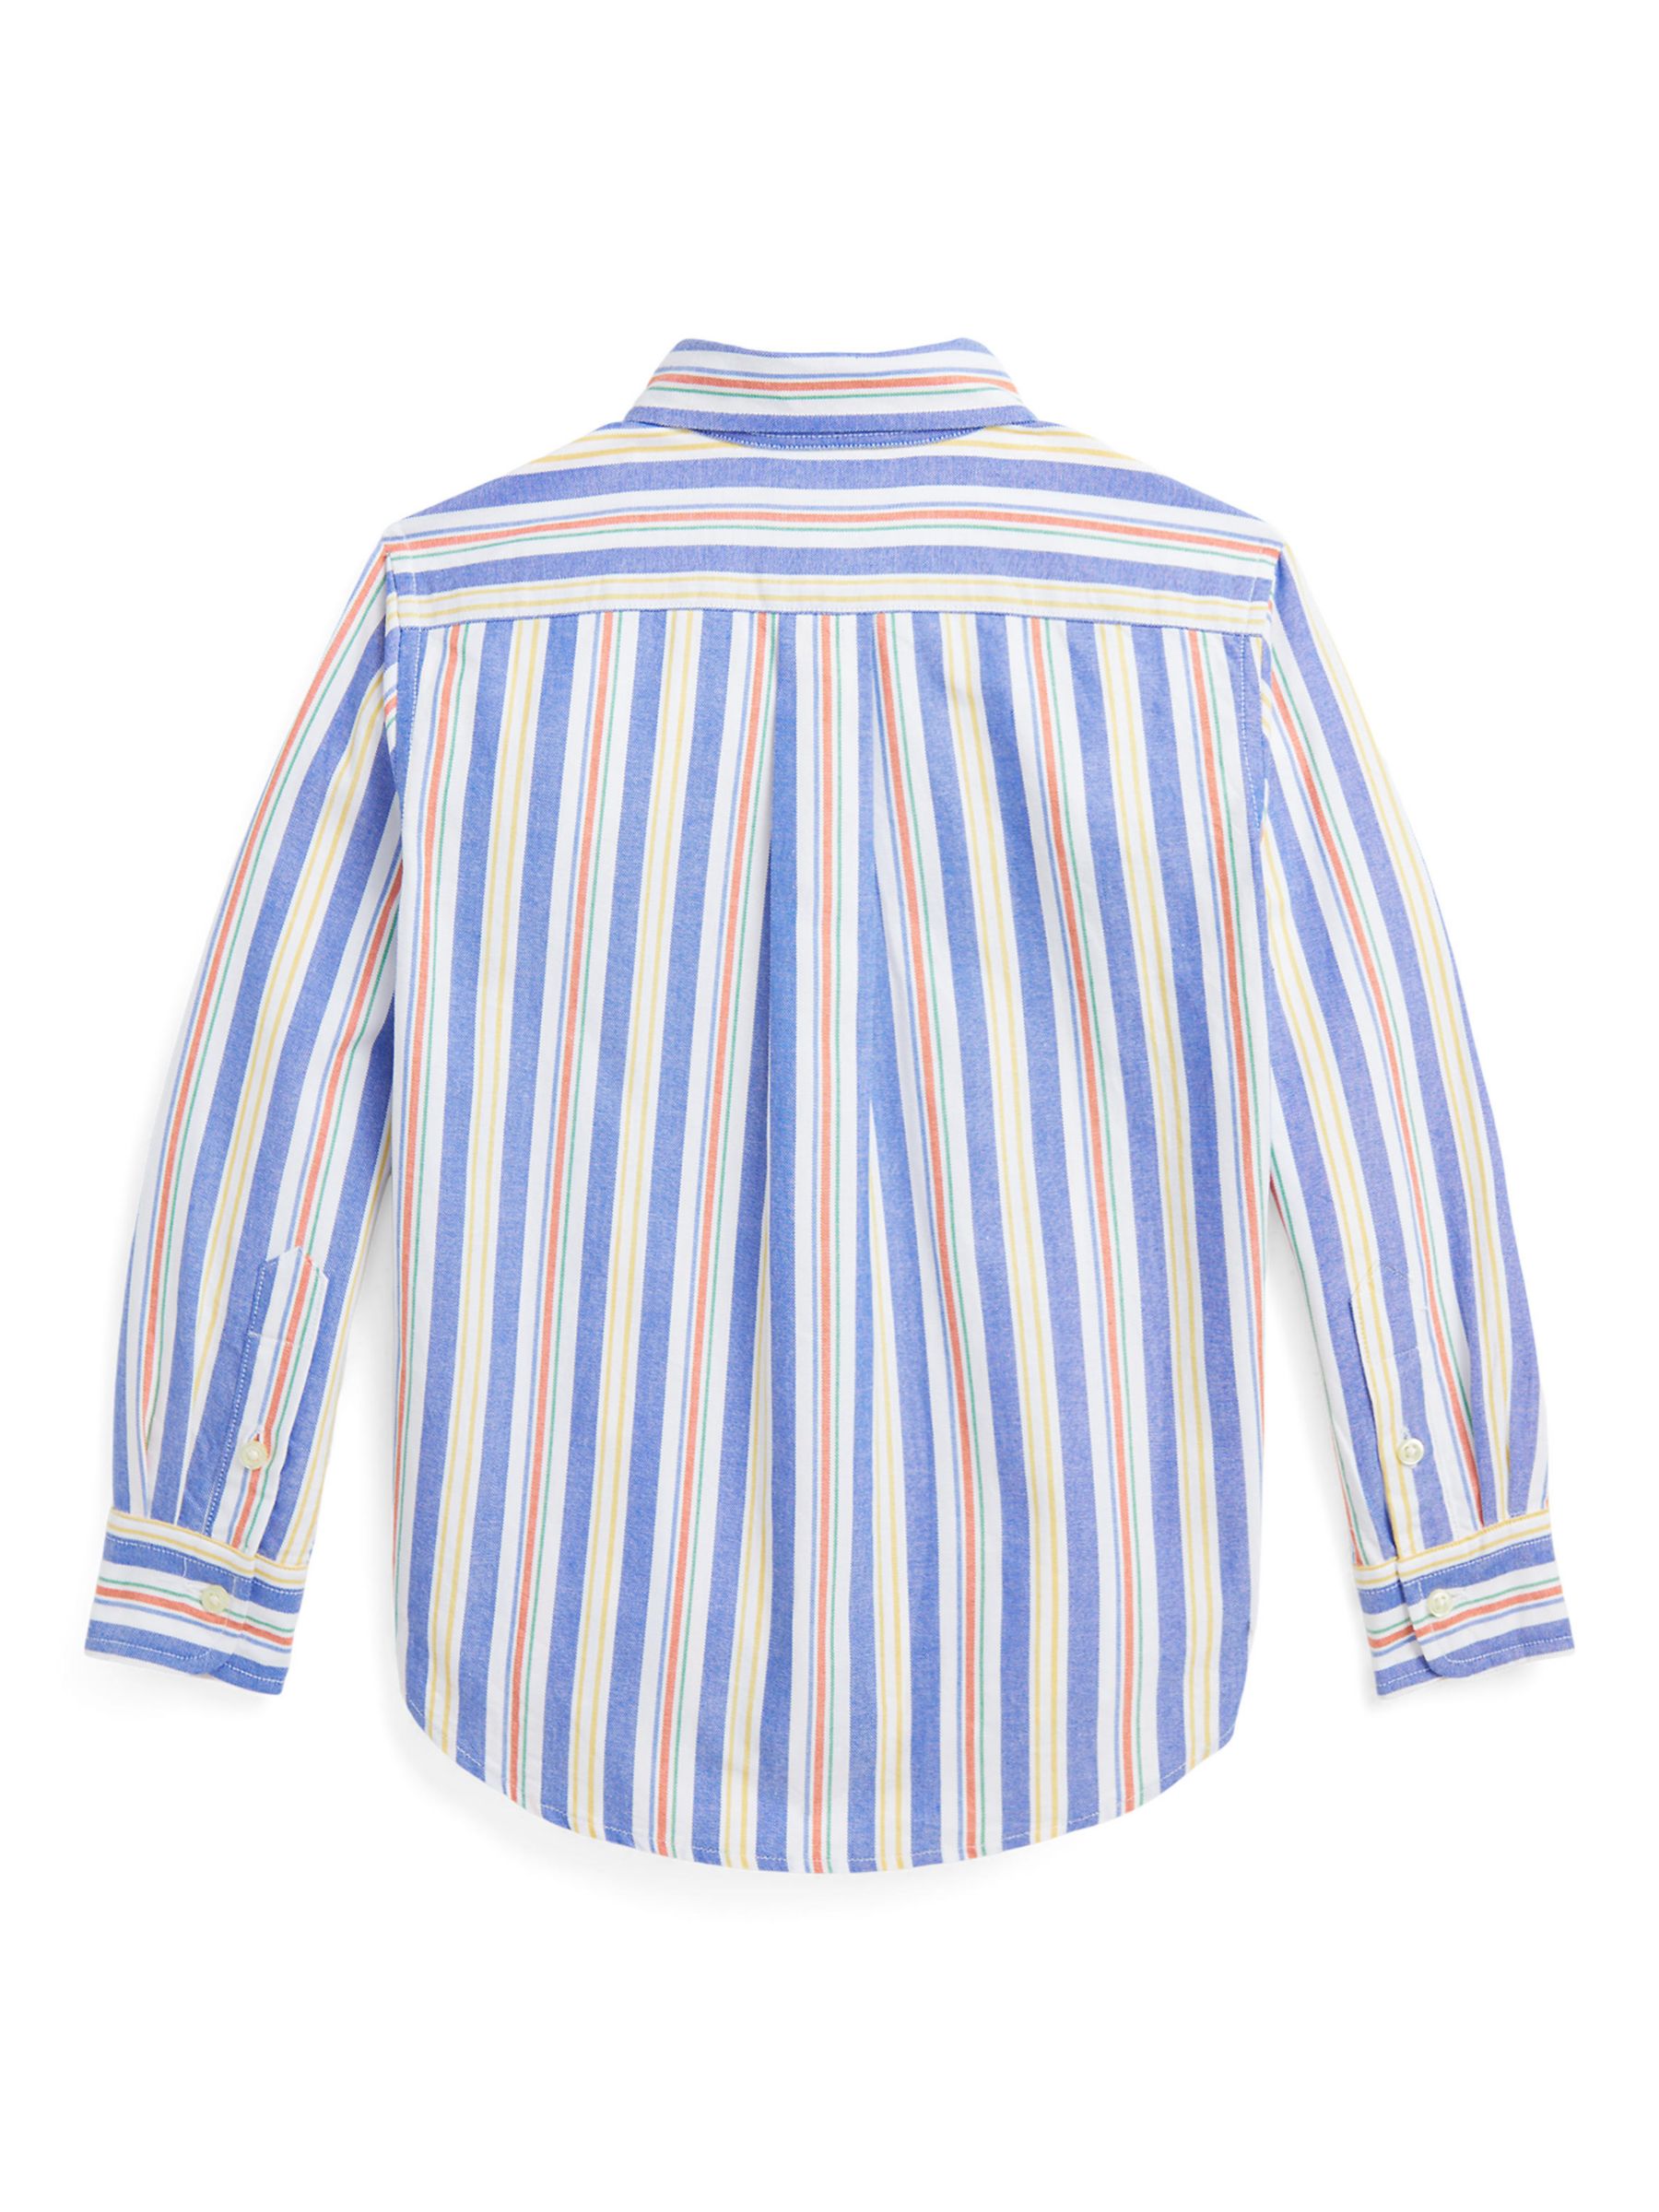 Ralph Lauren Kids' Oxford Cotton Striped Sport Shirt, Blue, 2 years